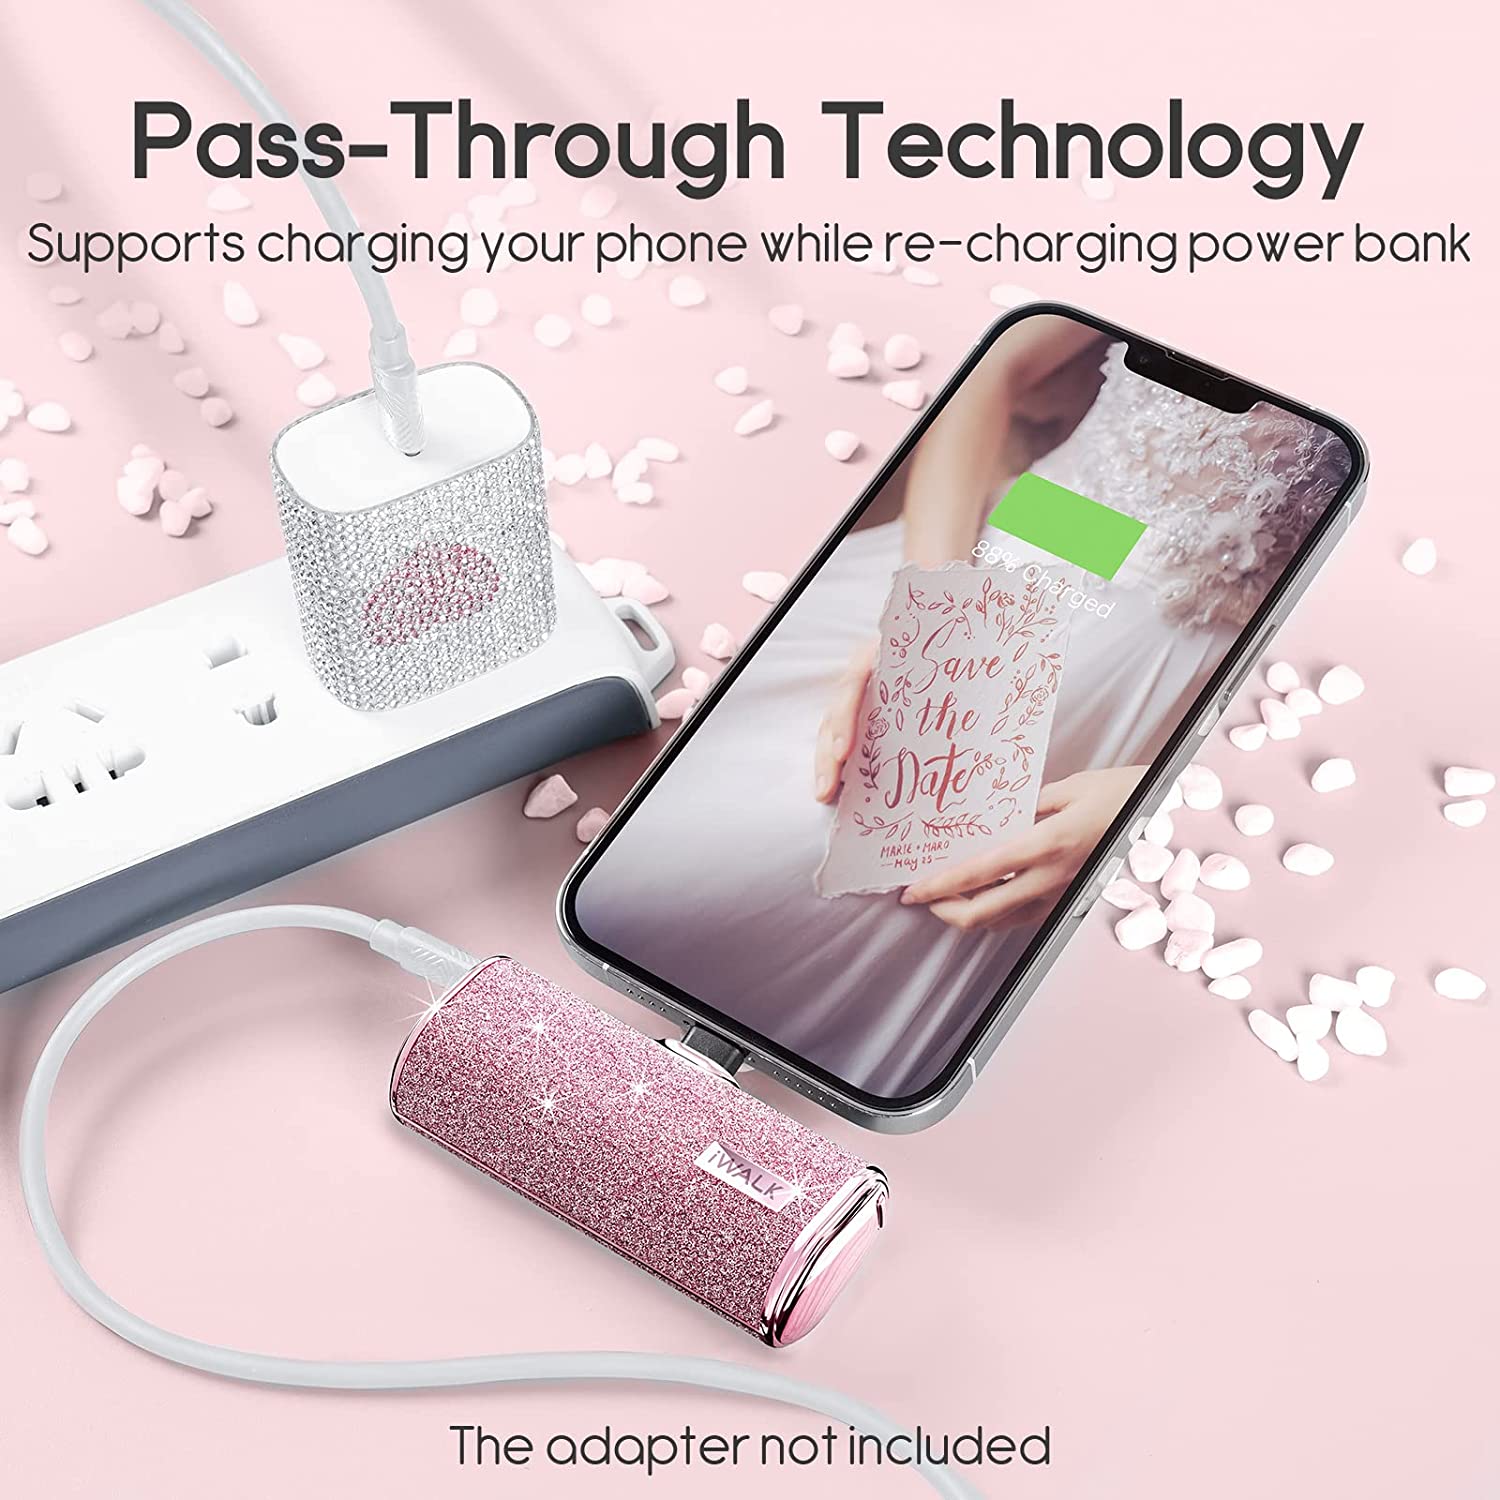 iWalk Linkme Plus Pocket Battery 4500 mAh For iPhone - Pink Diamond